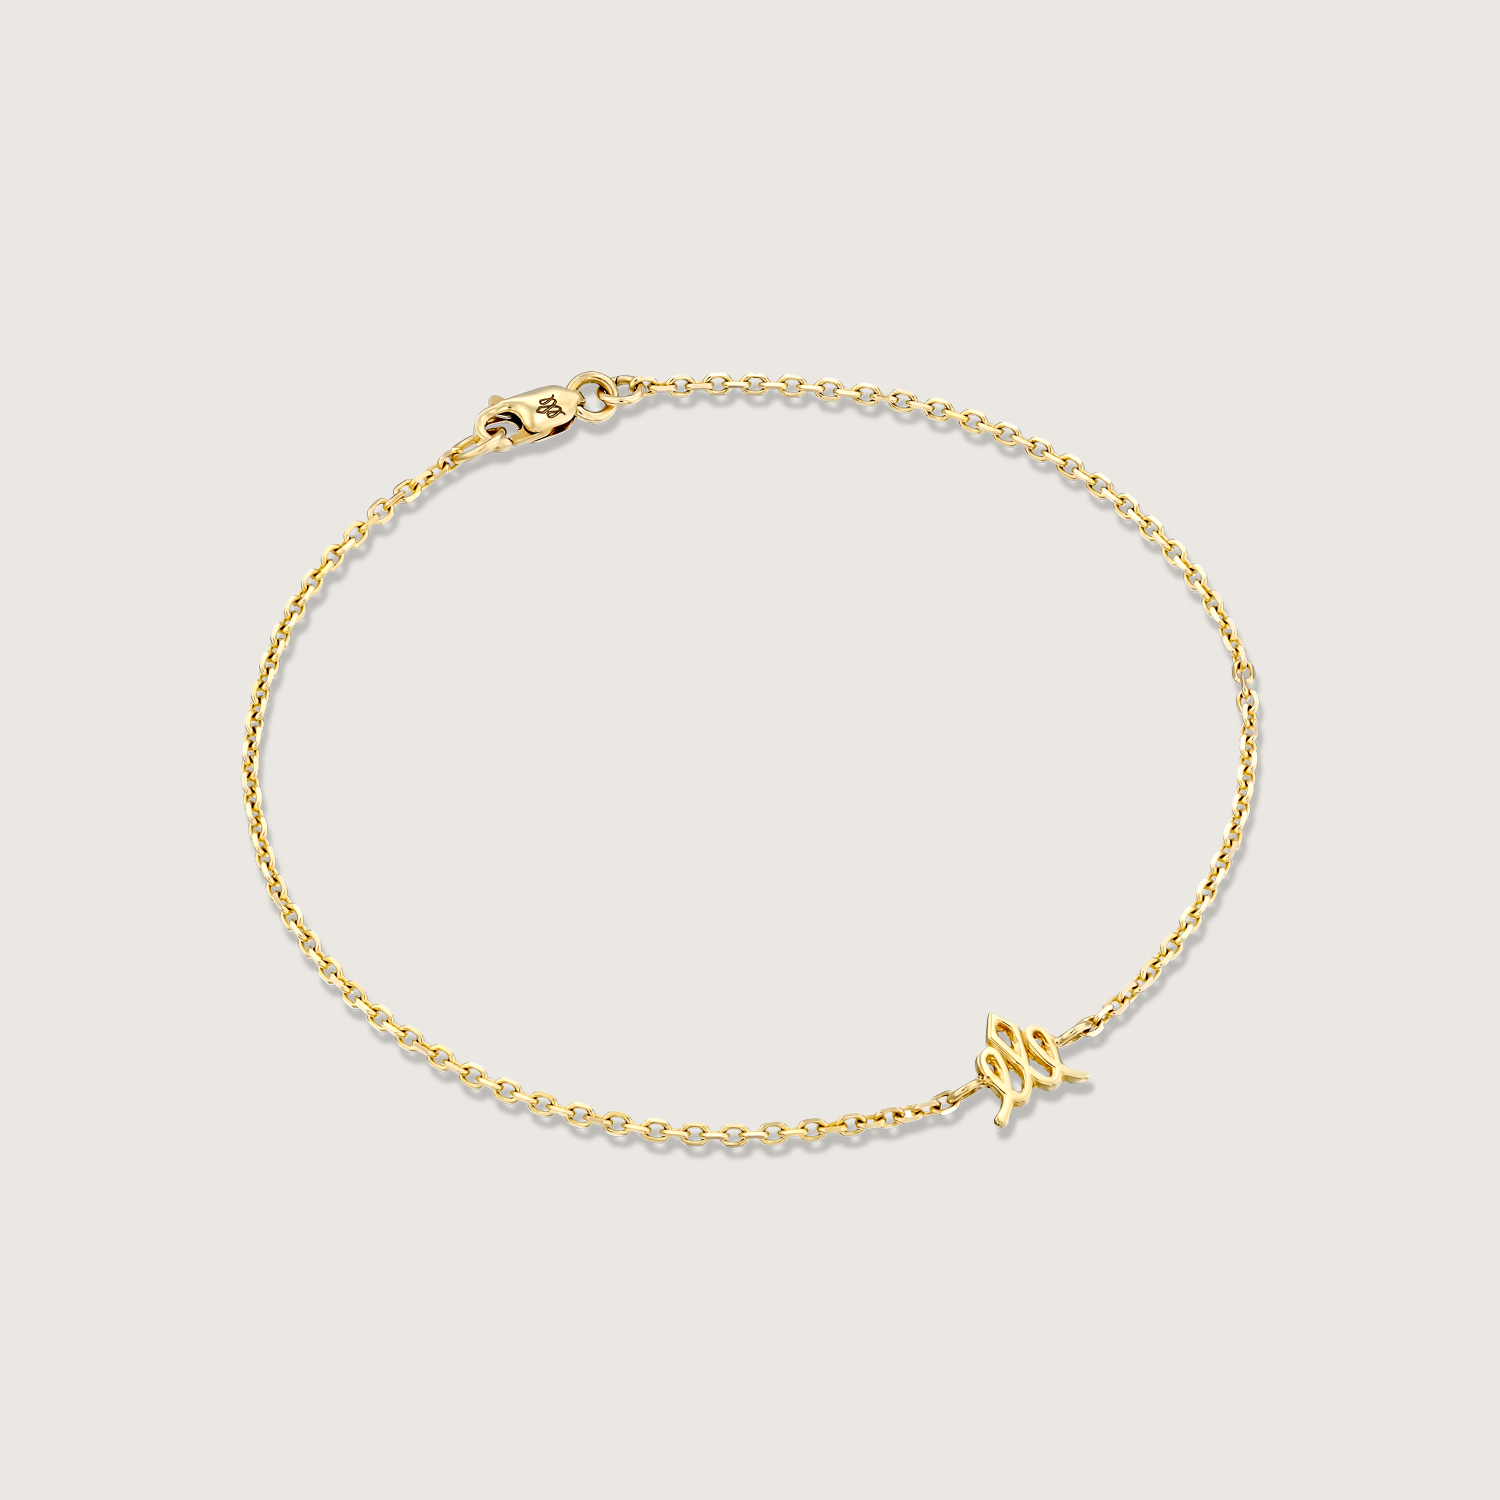 Crown gold chain bracelet